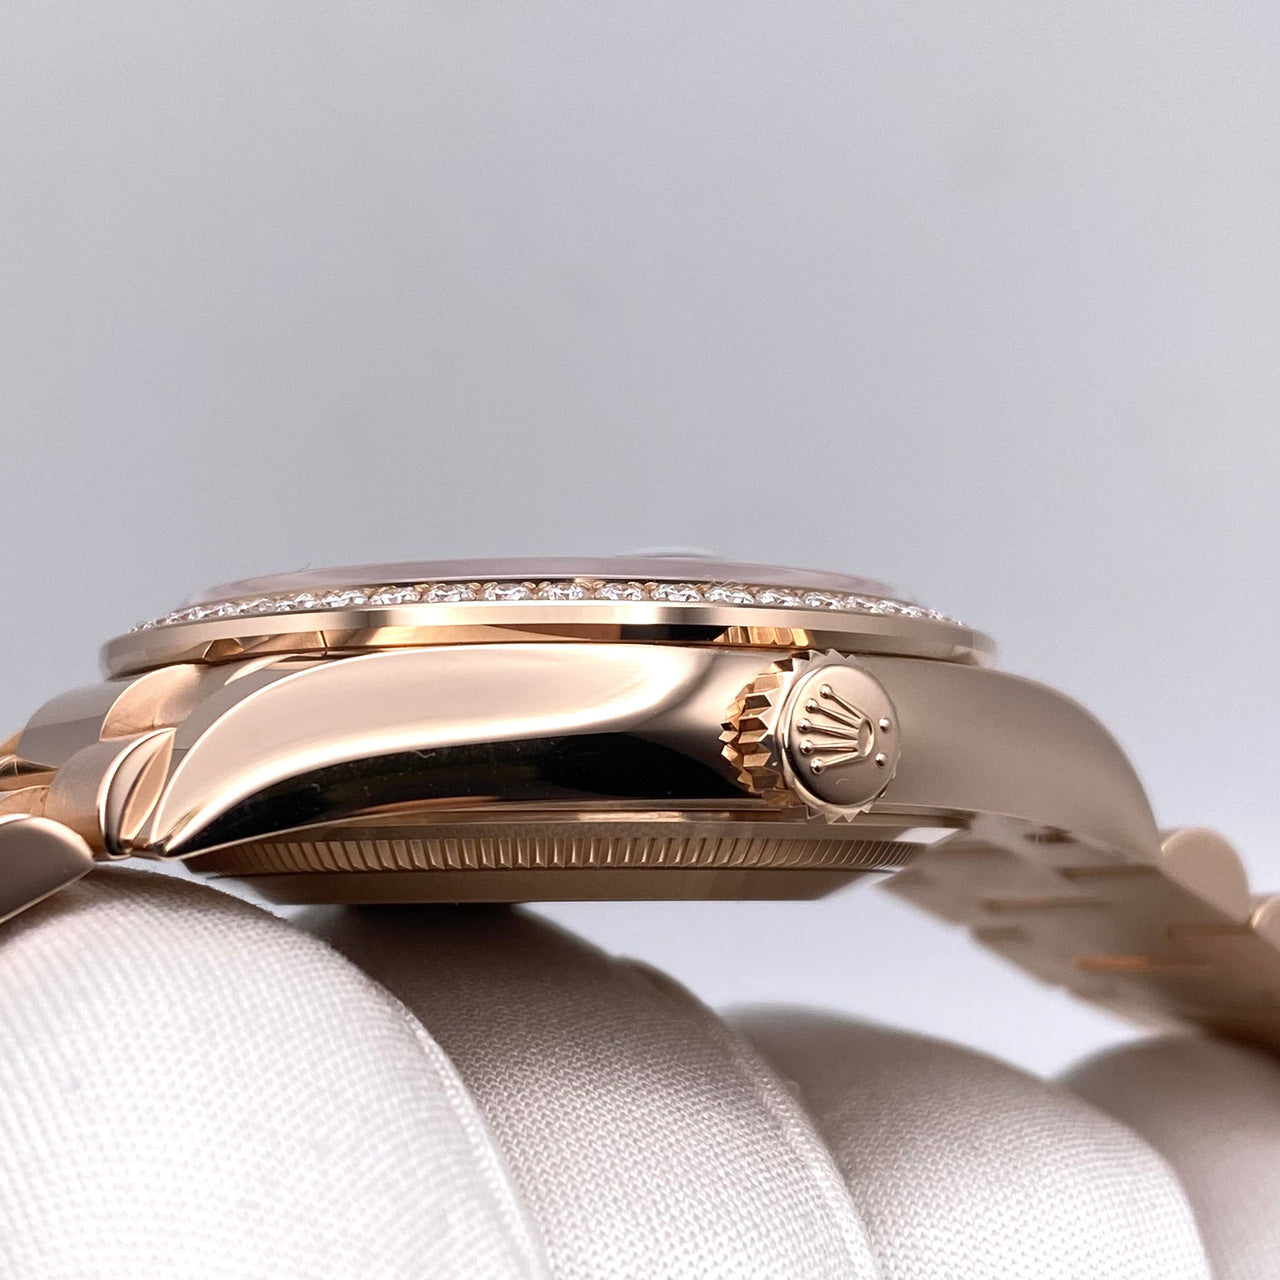 Luxury Watch Rolex Day-Date 36 Rose Gold Eisenkiesel Diamond Dial 128345RBR Wrist Aficionado